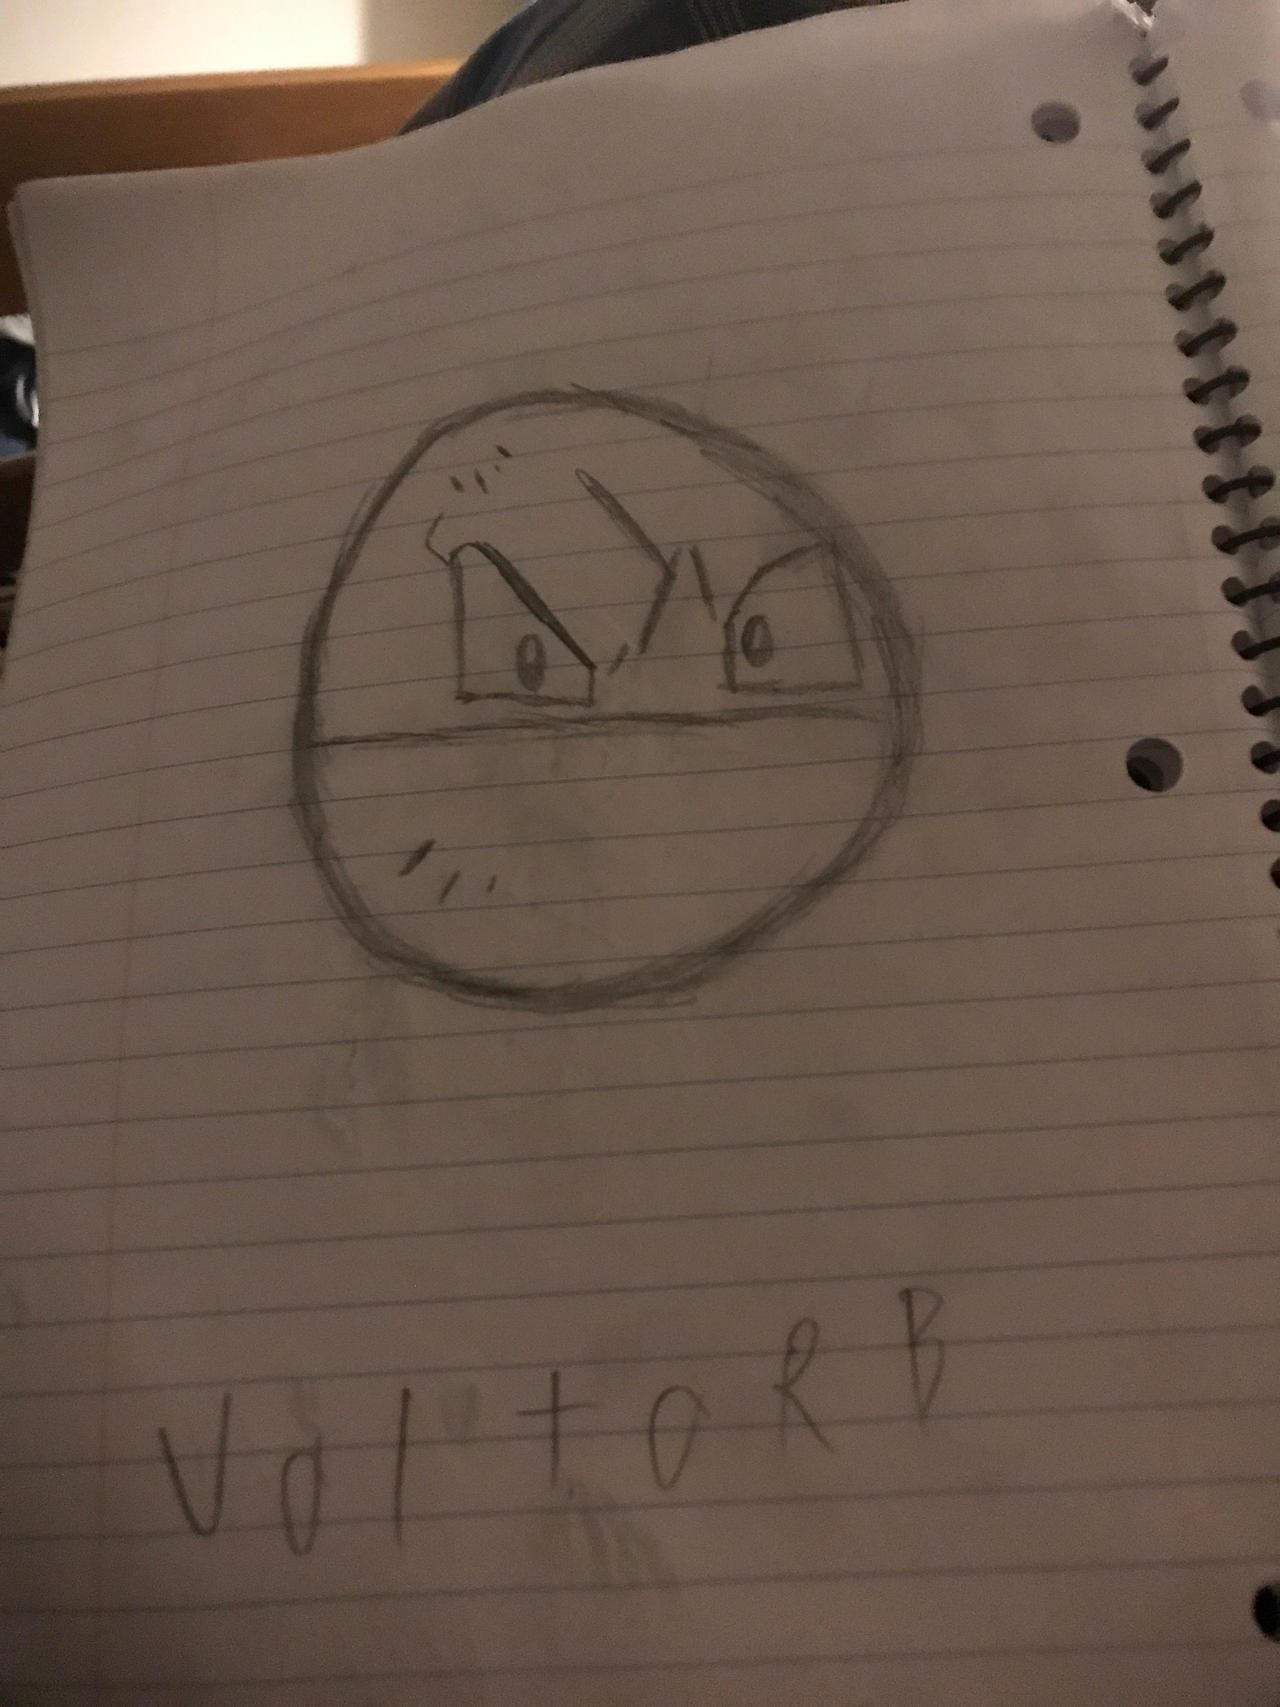 How To Draw Pokemon - Voltorb